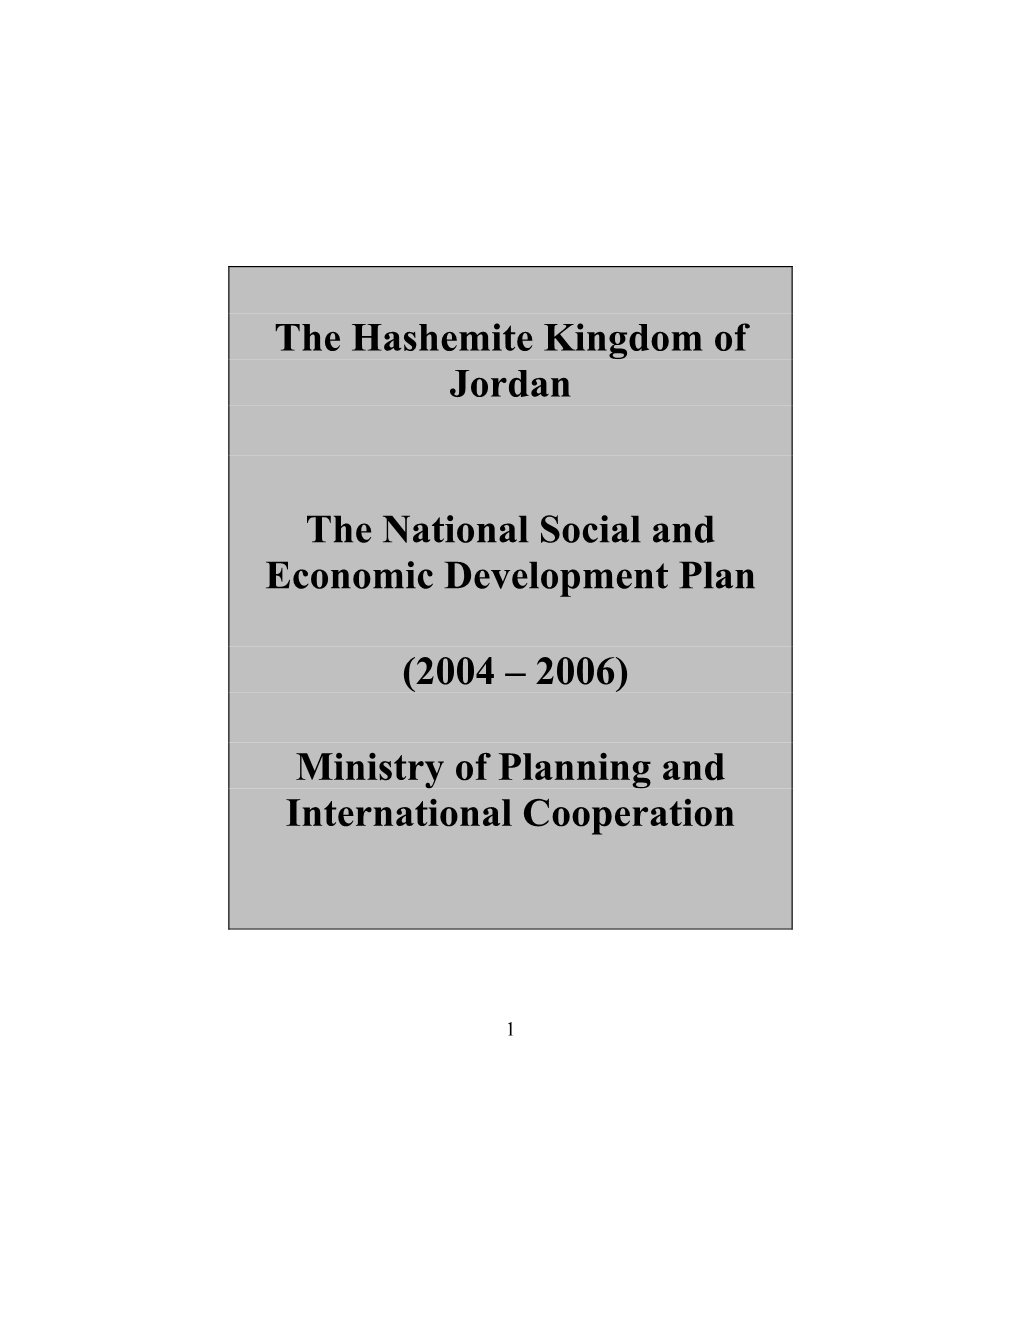 The Hashemite Kingdom of Jordan the National Social and Economic